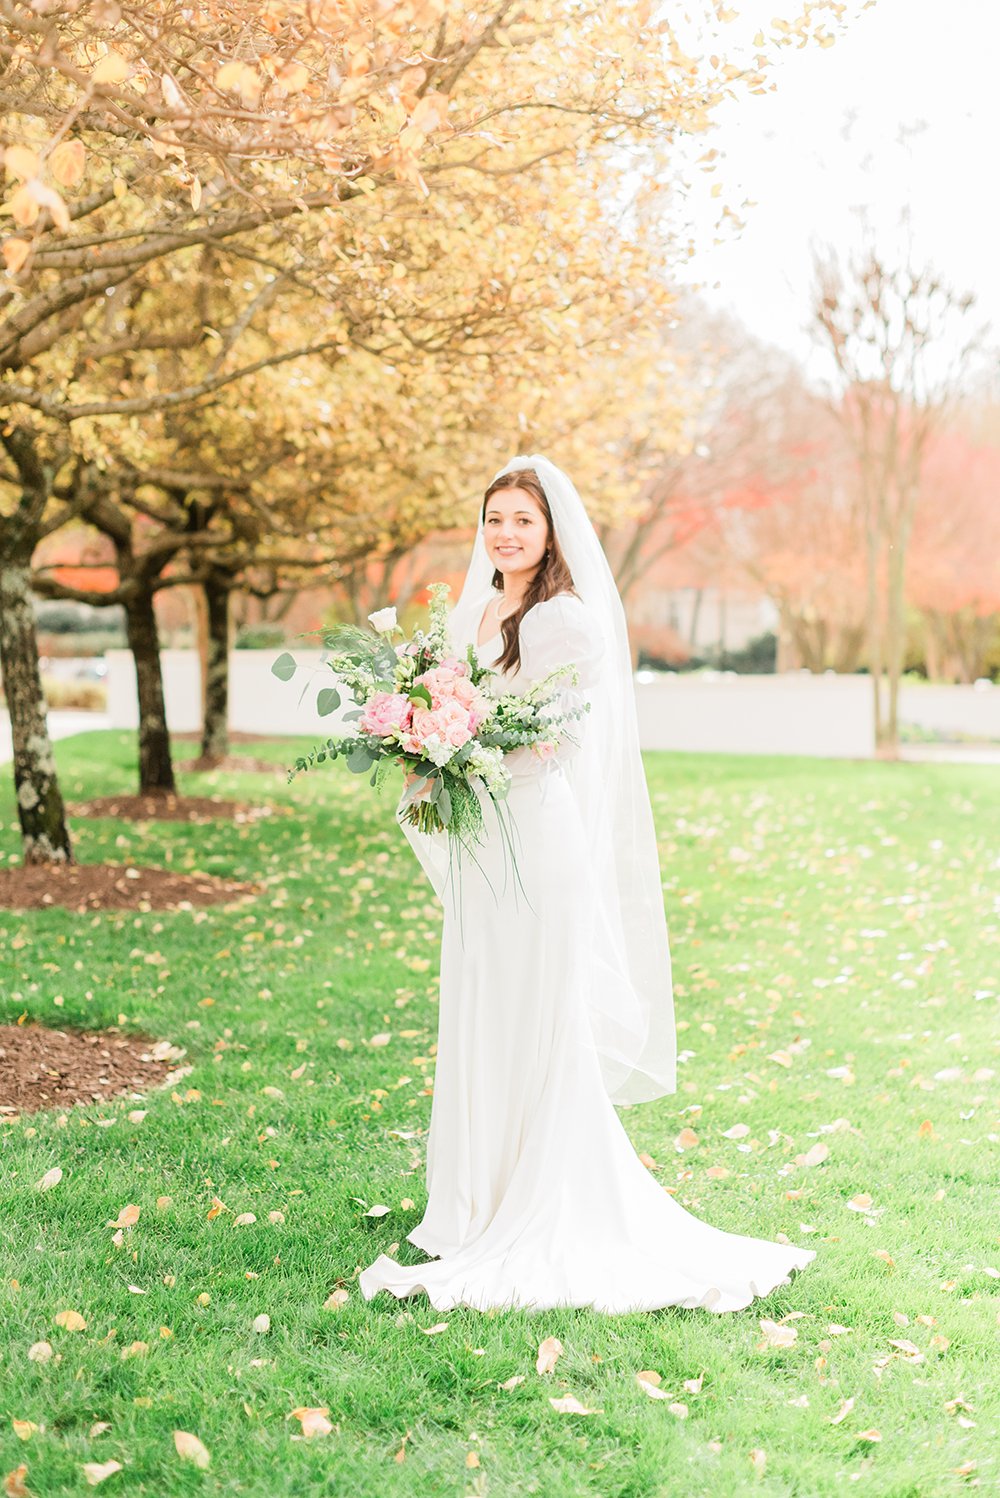  Jacquie Erickson, an Atlanta-based photographer, captures a bride standing on a grassy lawn holding her wedding bouquet. Bridal photos wedding photographer Sharpsburg Roswell #weddingphotographer #ldsweddings #atlantatemple #jacquieerickson #bridalp